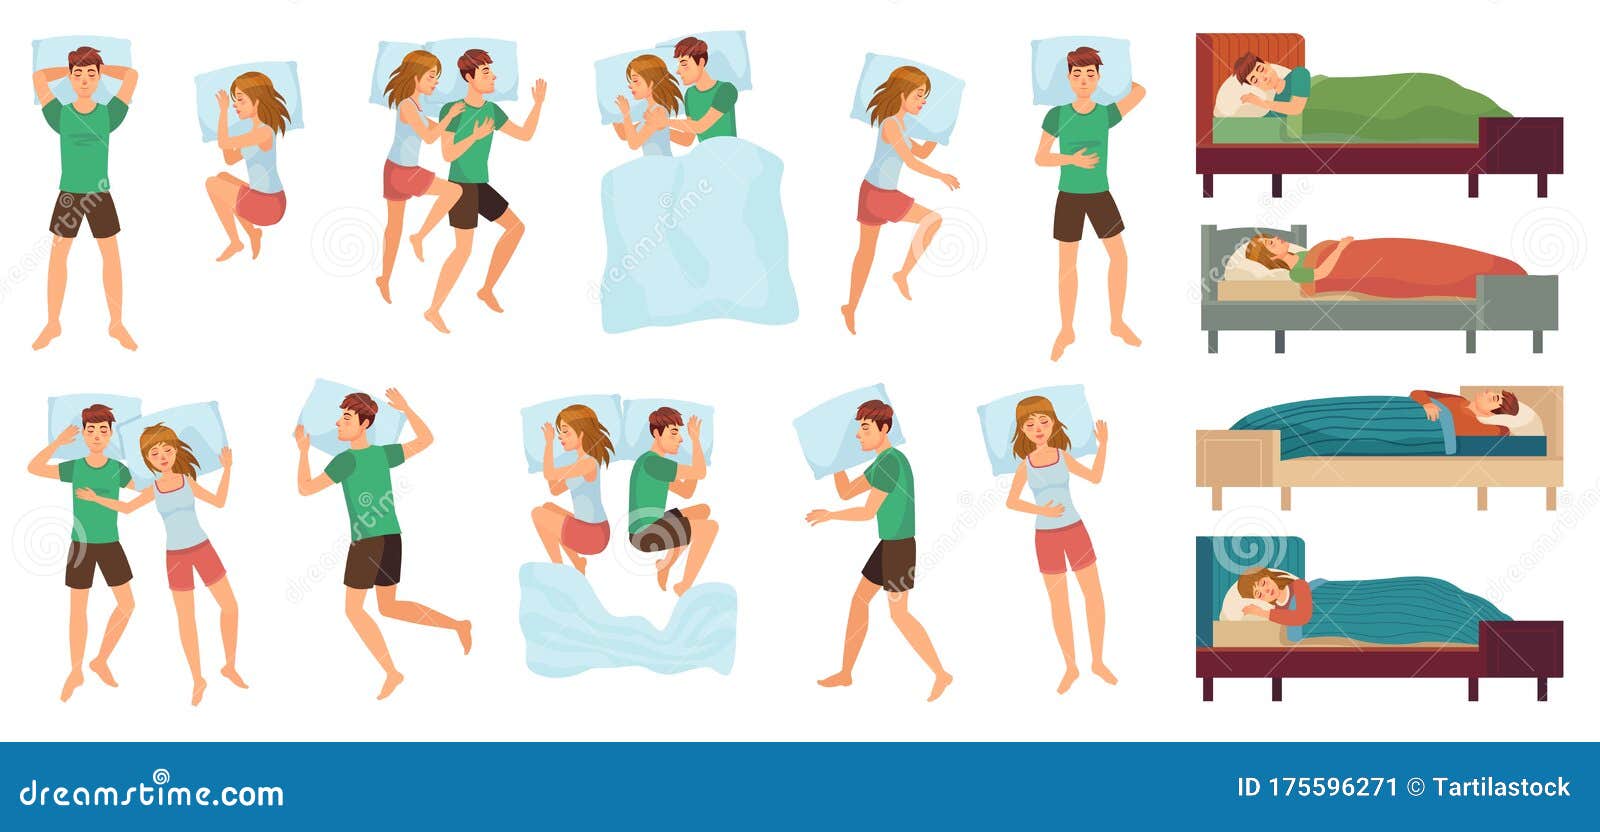 The Best Sleeping Position for Better Health and Sleep | Sleepopolis